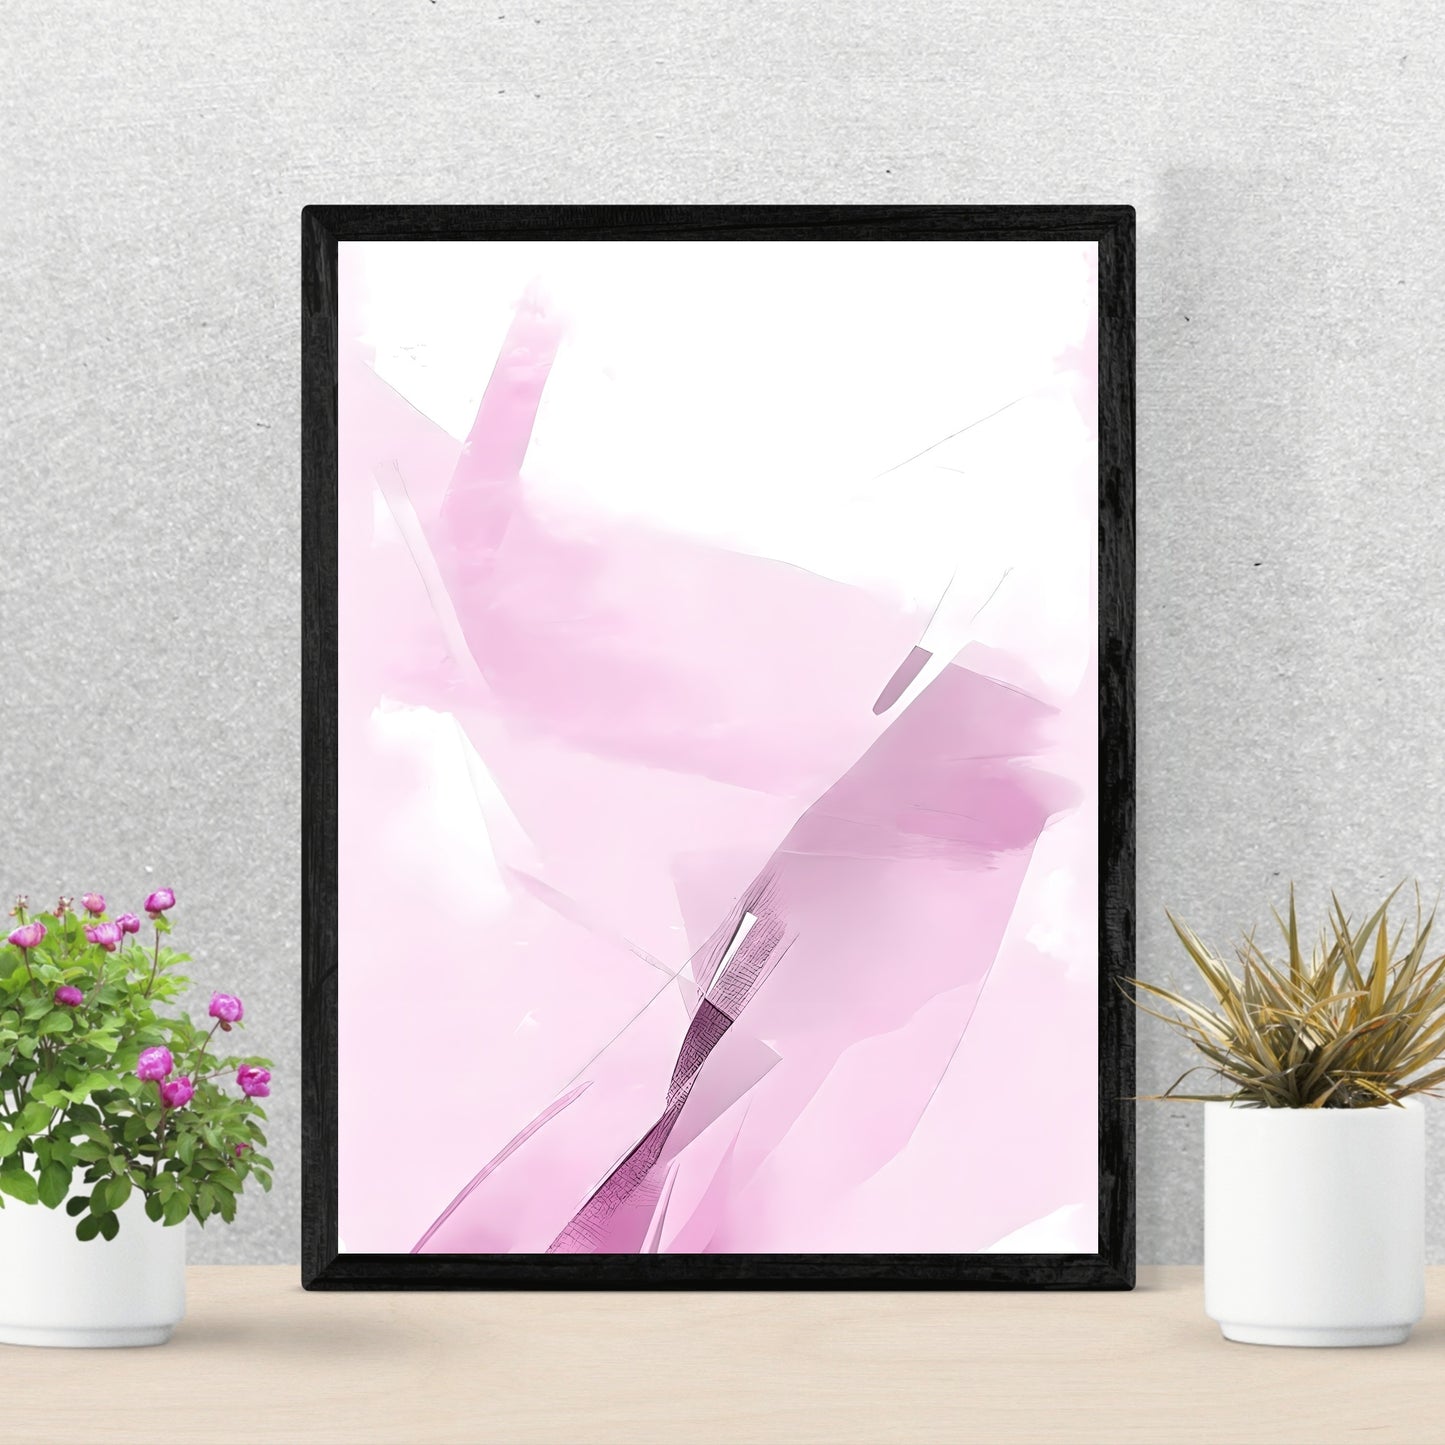 Abstract wall art pink white modern minimalist artprint bedroom decor neutral tones Paper Poster Print